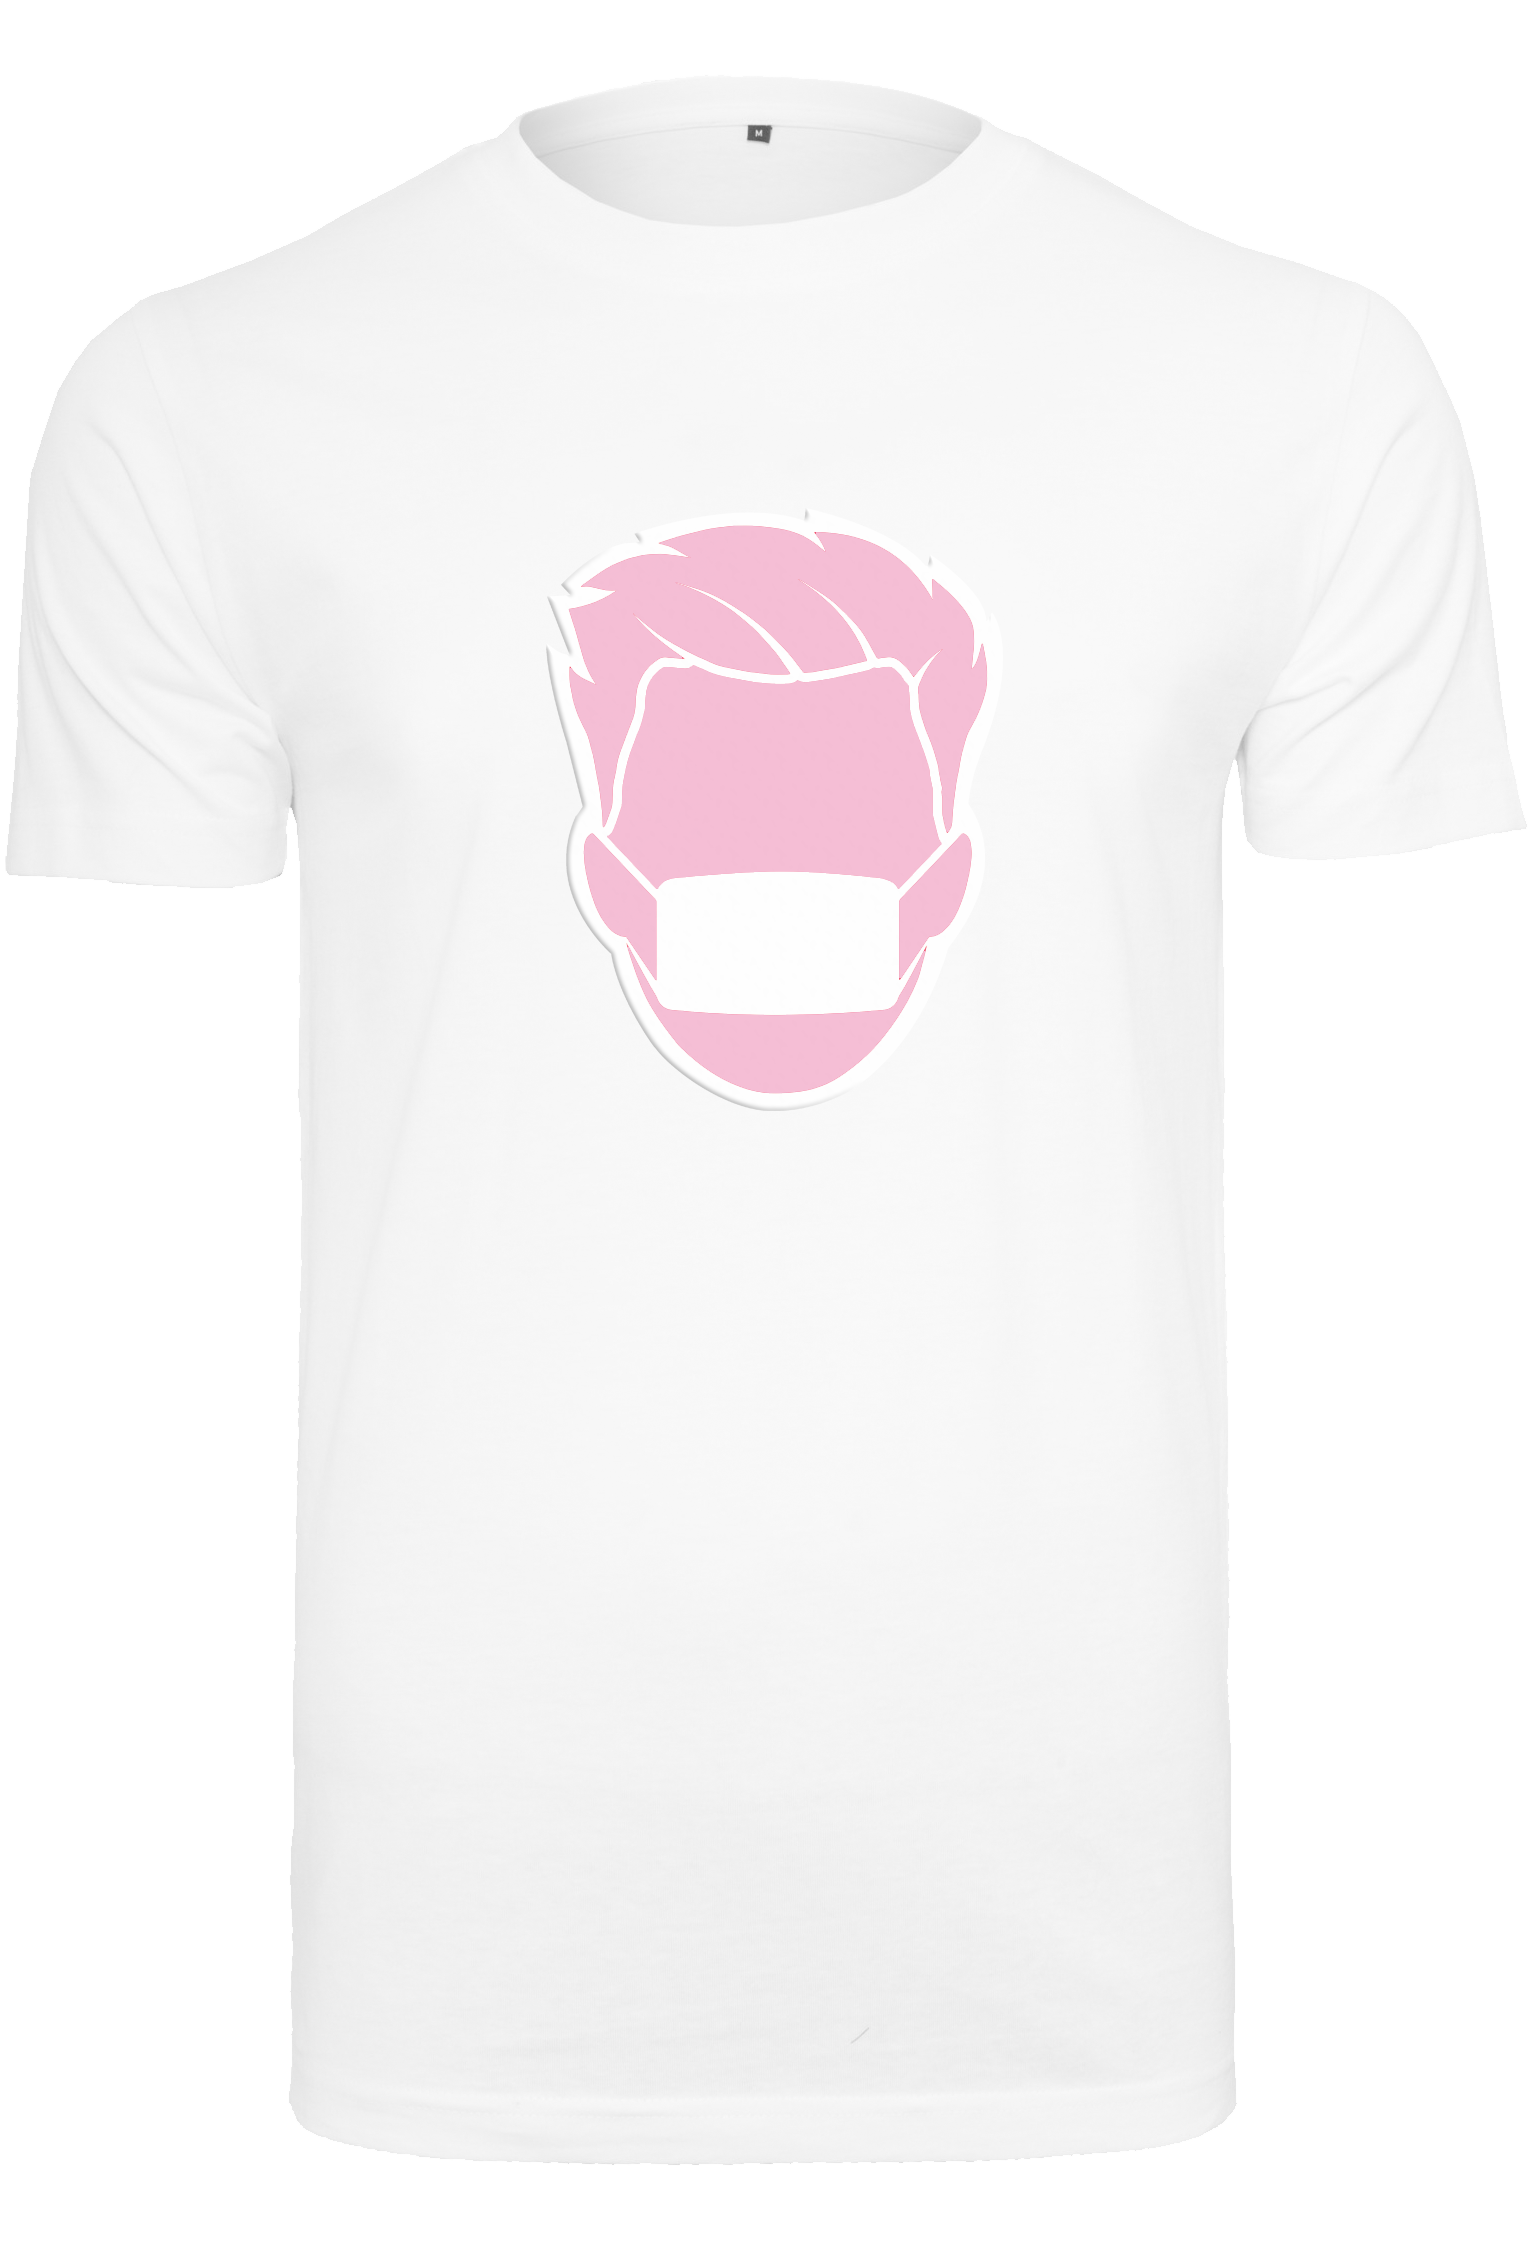 Pinkdog white T-Shirt